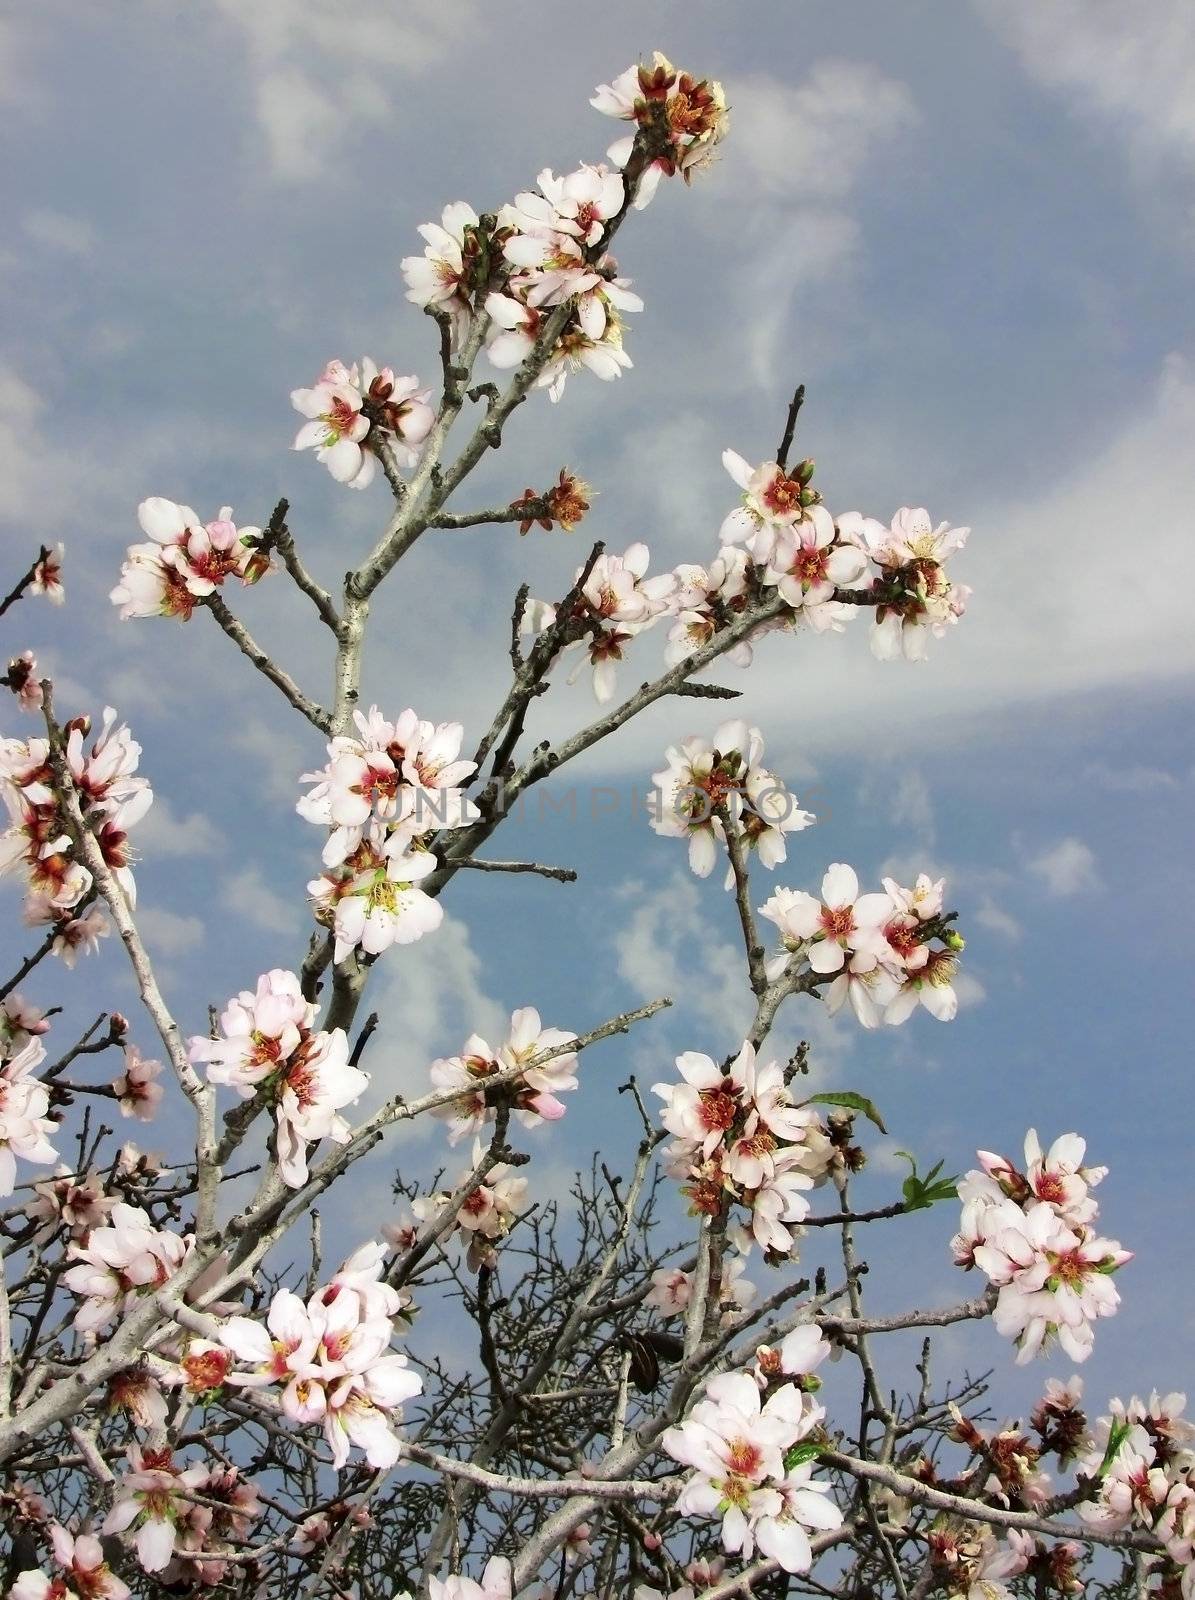 flowering almond branch against the sky







flowering almond